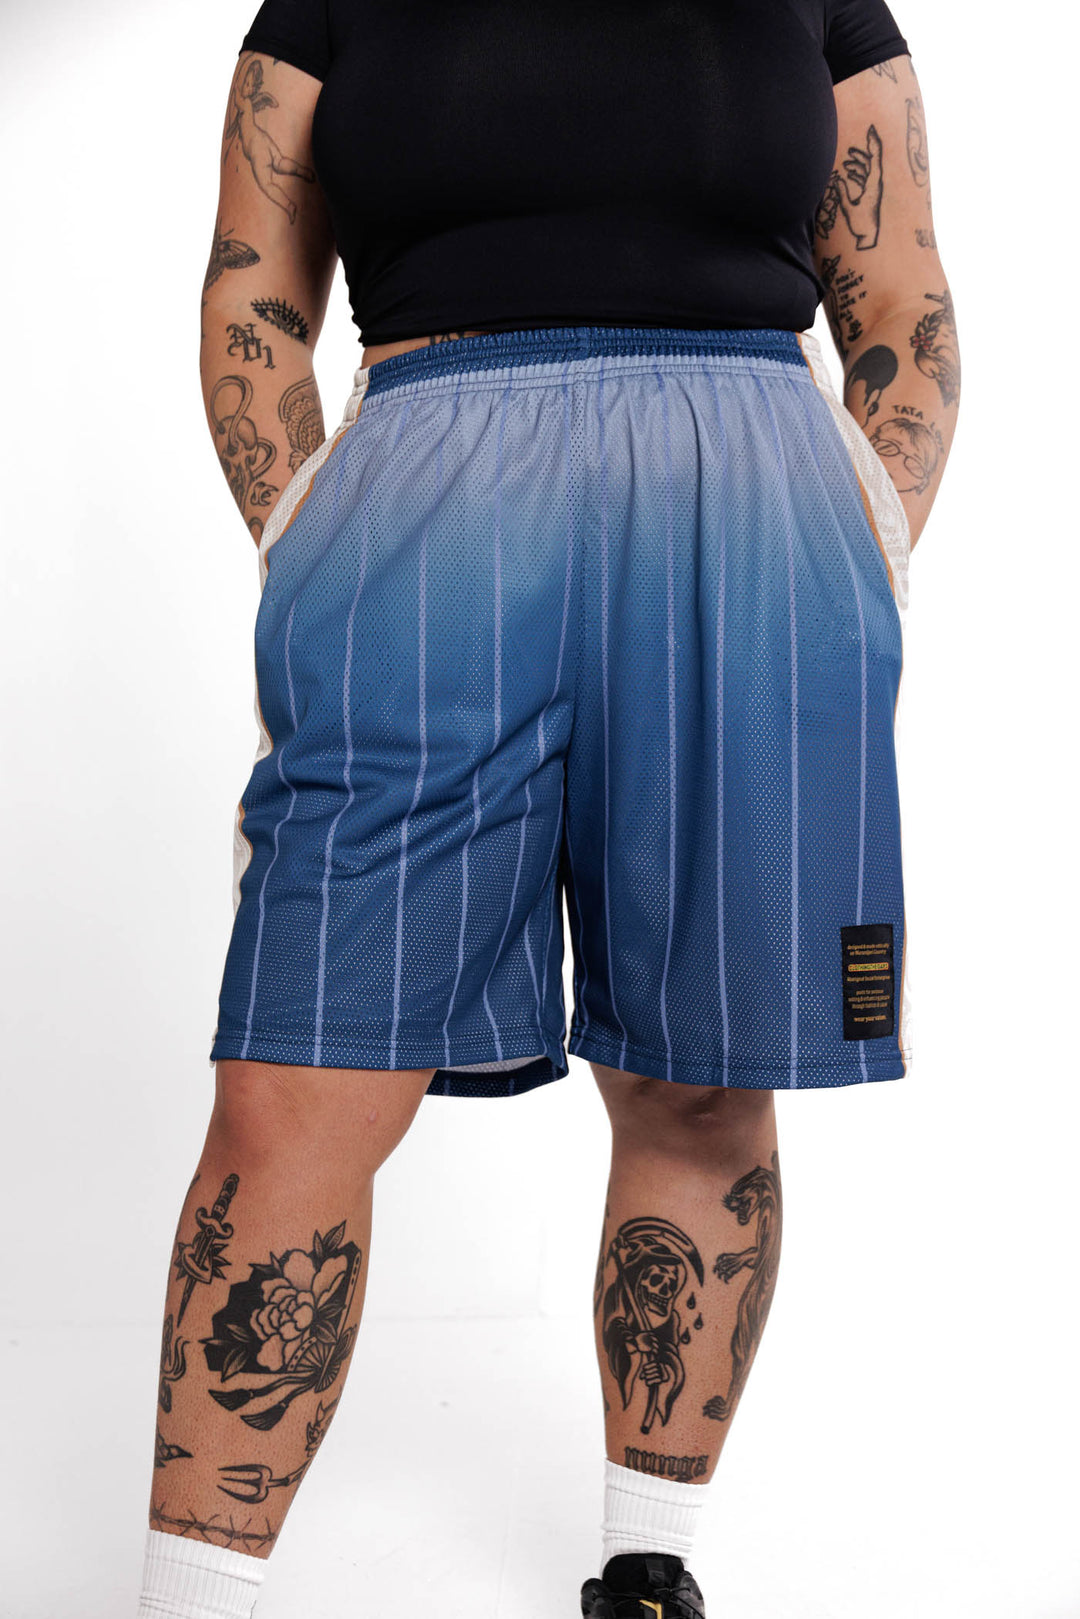 Ltd. Ed. Narrm Basketball Shorts